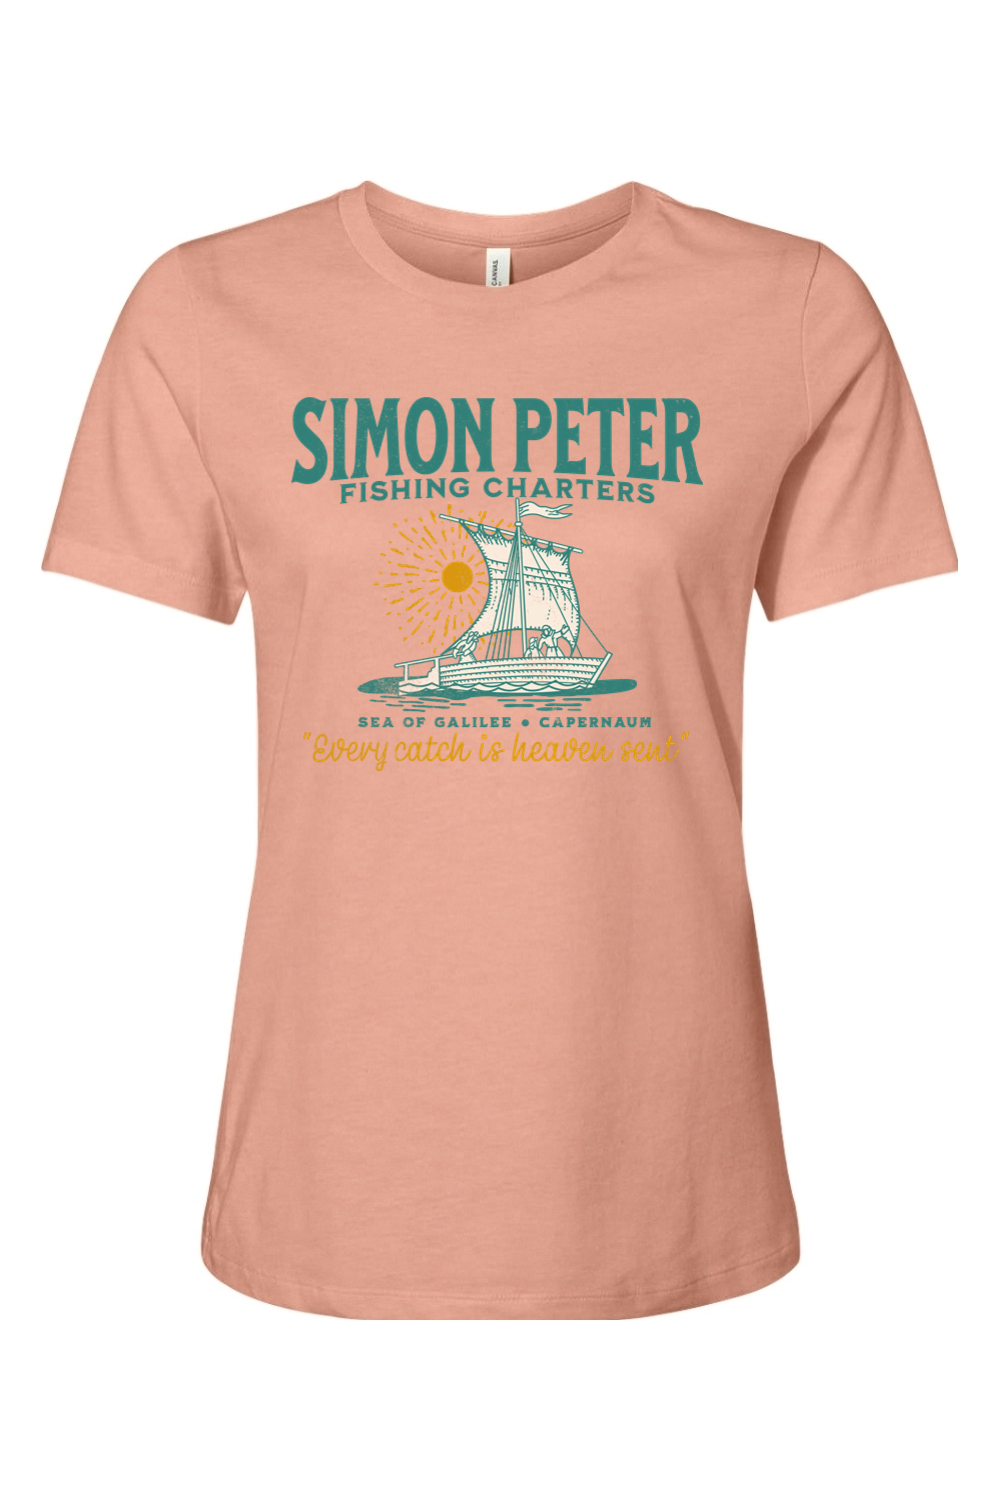 Simon Peter Fishing Charters - Ladies Tee